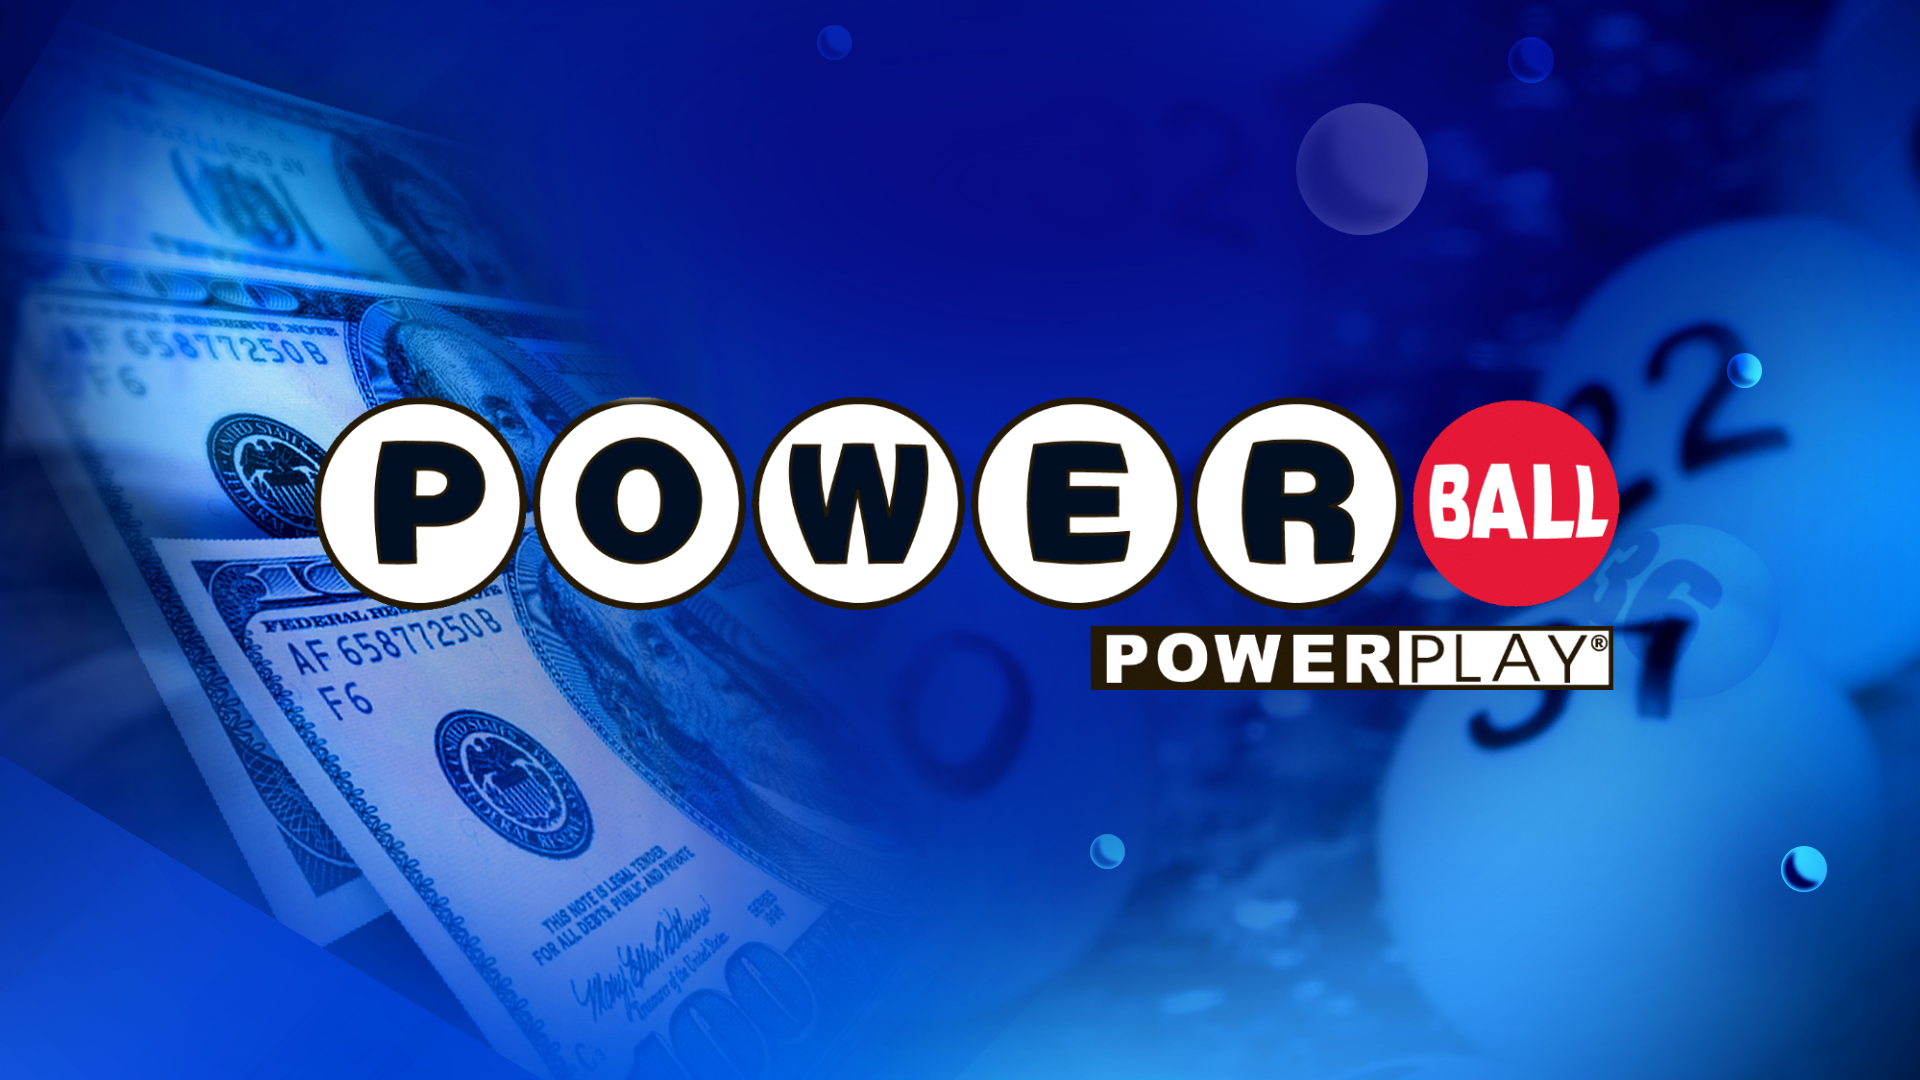 Winning ticket for $1 billion Powerball jackpot sold in California - ABC  News